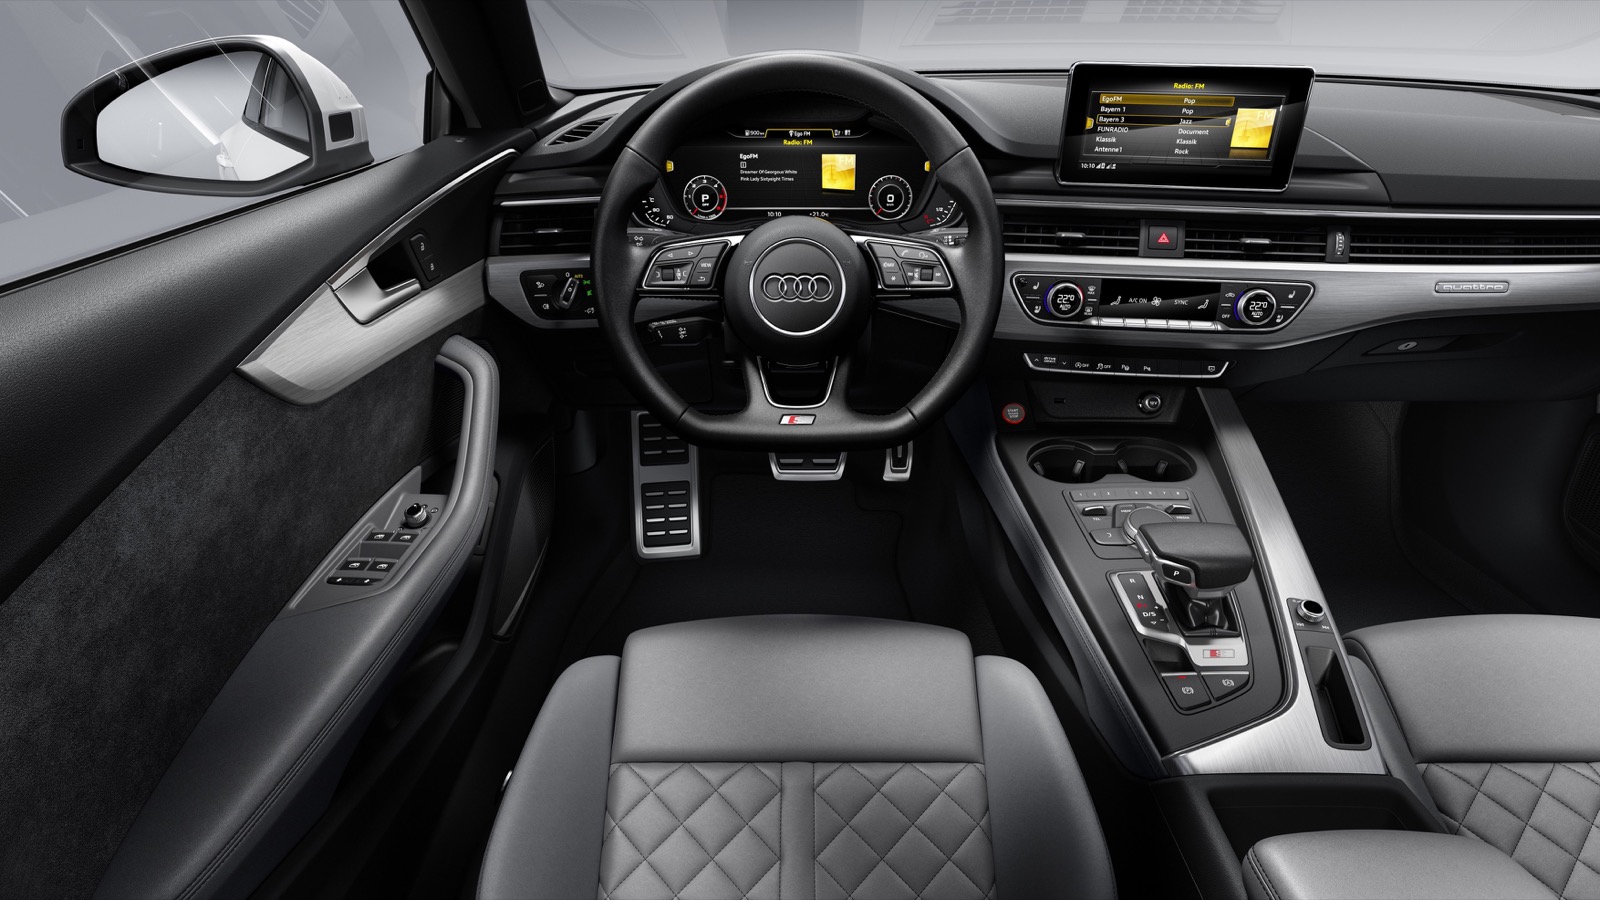 Jetzt aber: Auch Audi S5-Modelle mit TDI-Motor!